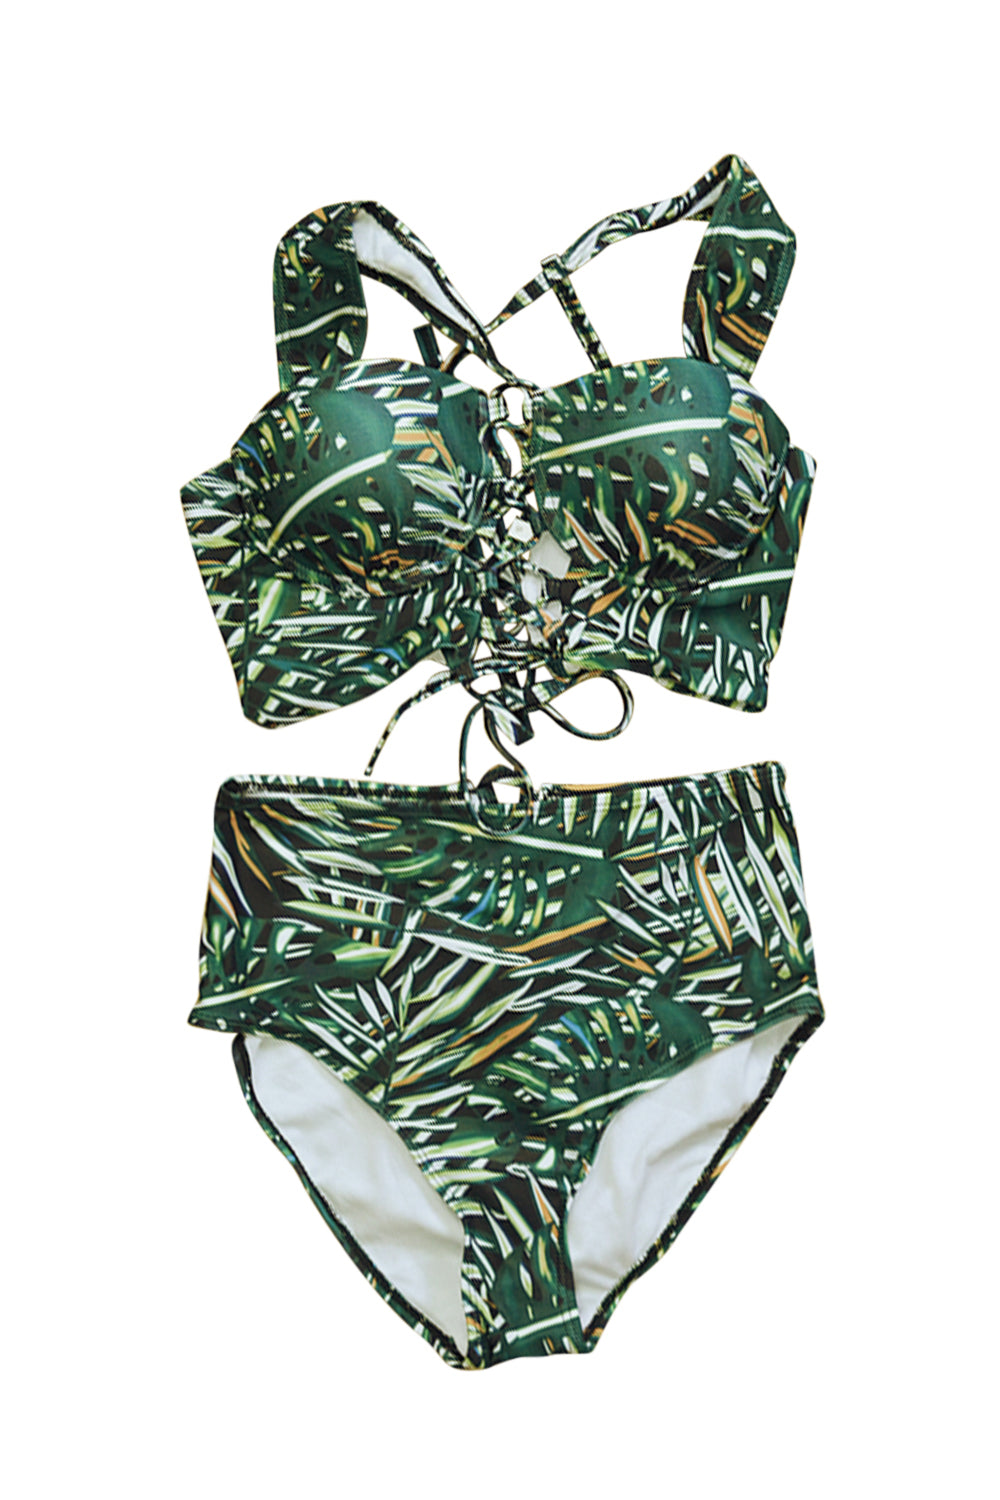 Iyasson Palm Leaves Printing Halter design Bikini Set